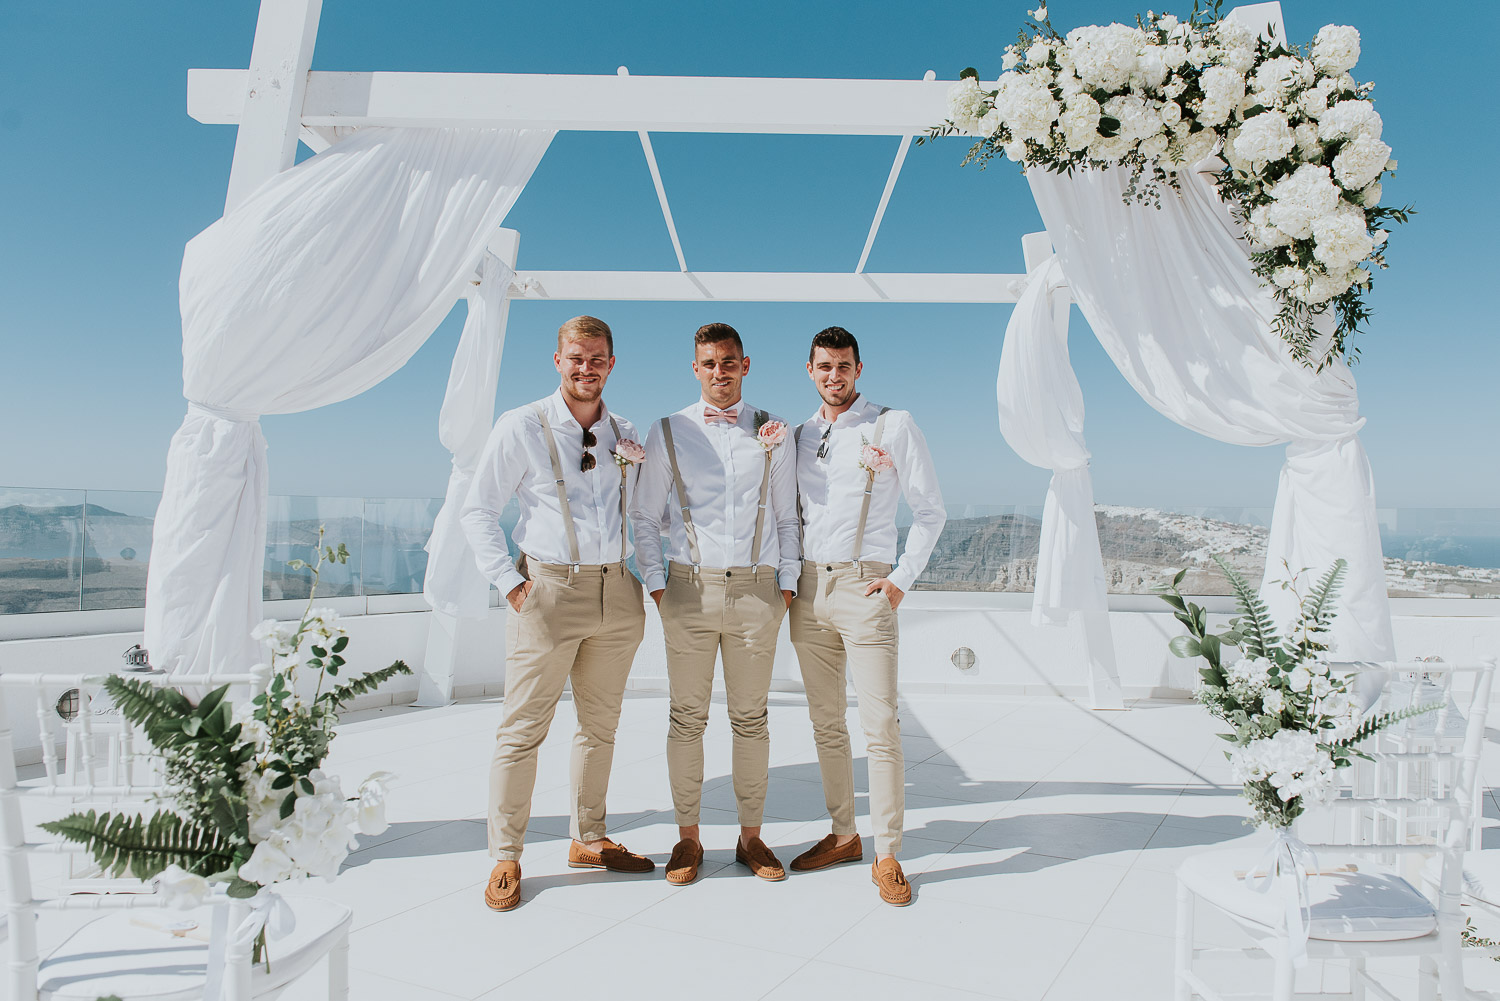 Wedding photographer Santorini: groom and groomsmen under gazebo covered in flowers by Ben and Vesna.